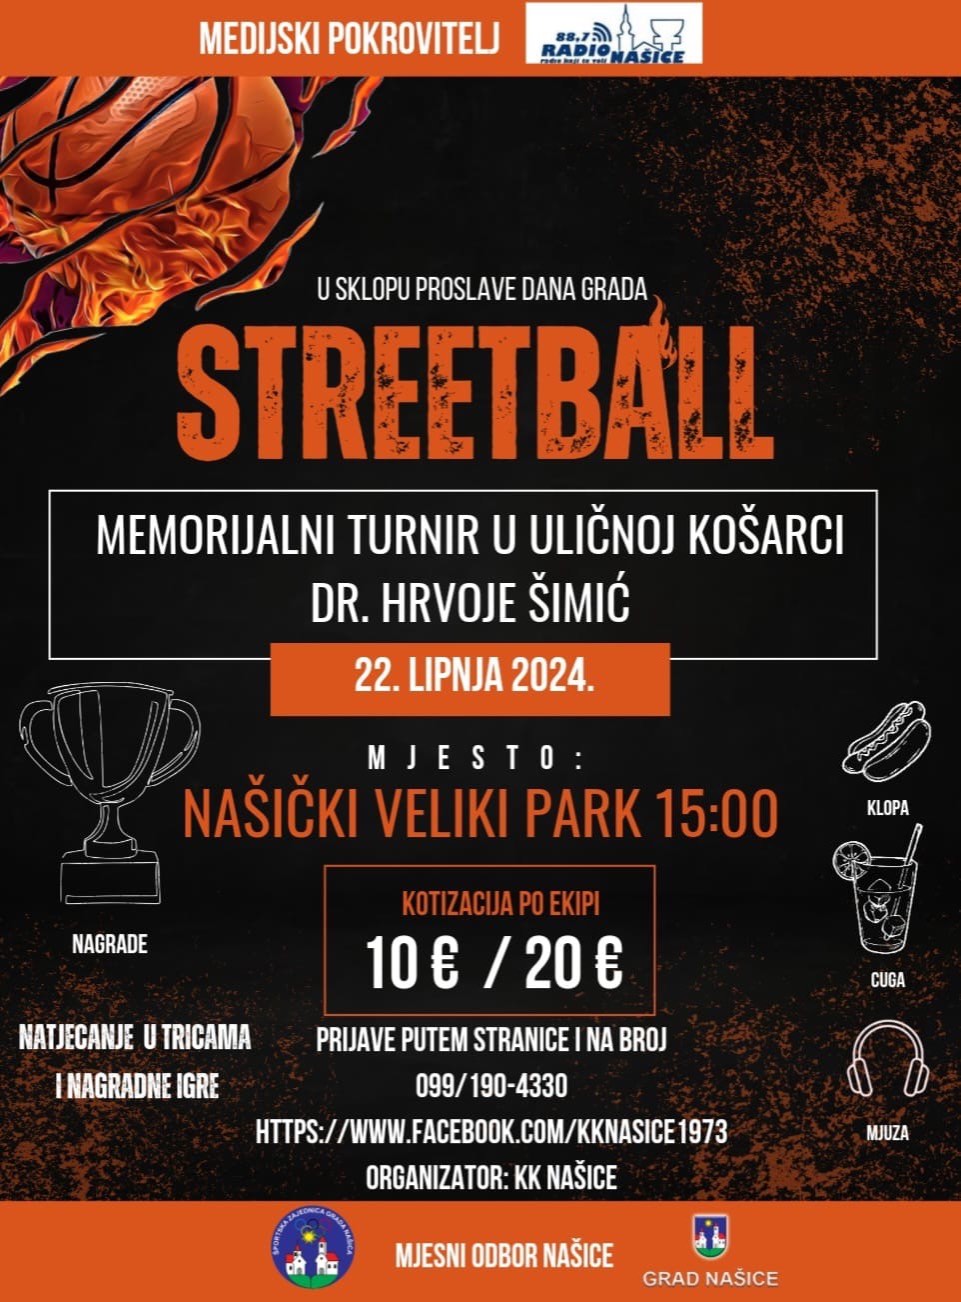 Plakat Streetball Memorijalni turnir